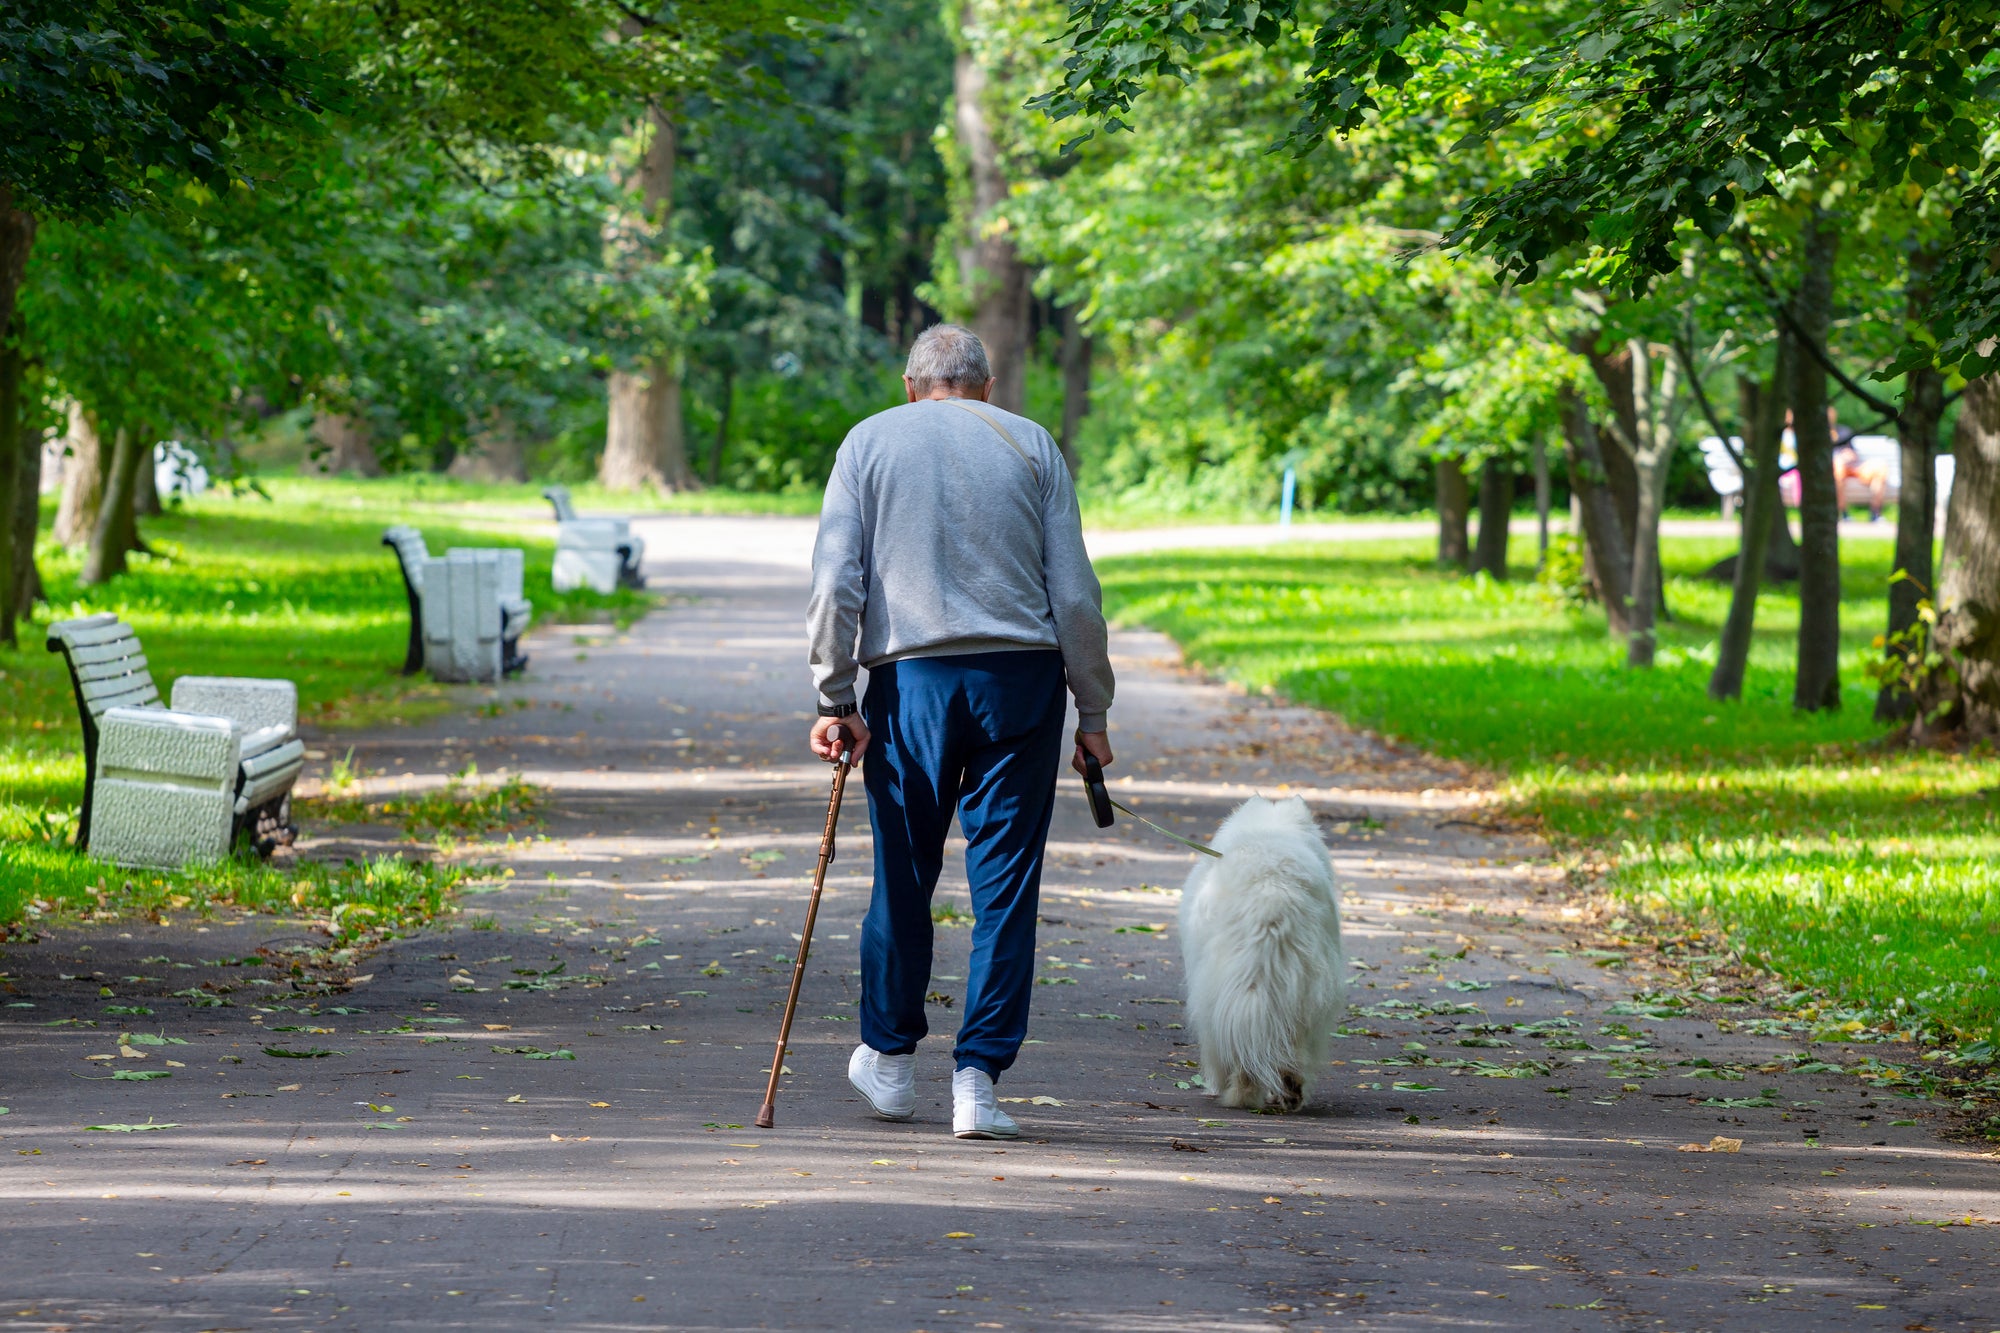 An elderly man walking a dog on a path in a park.